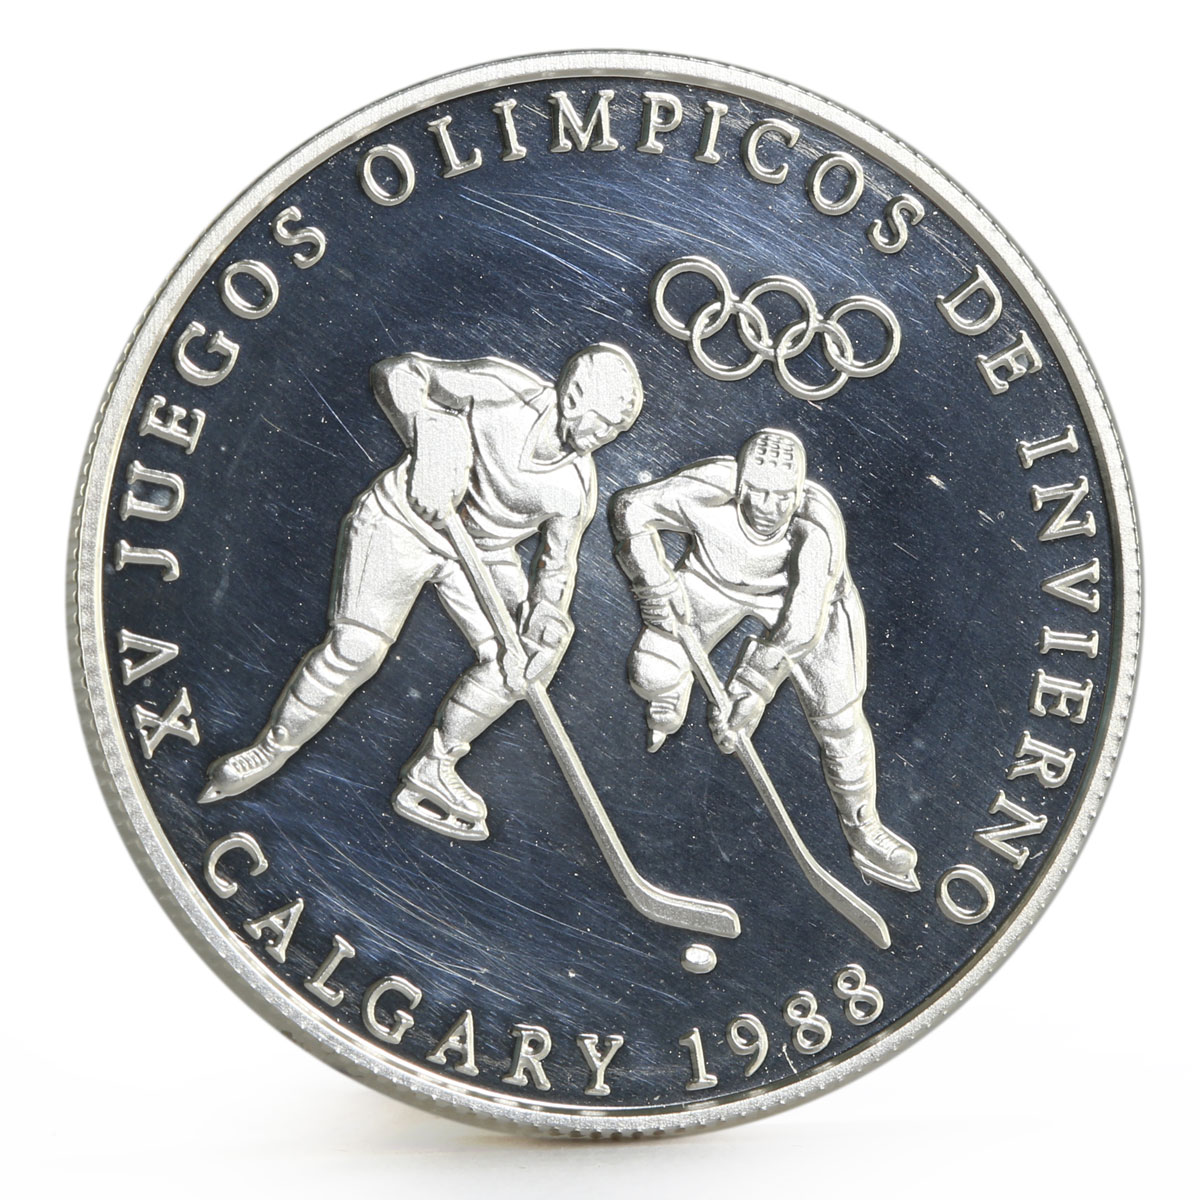 Panama 1 balboa Calgary Olympic Winter Games series Hockey silver coin 1988